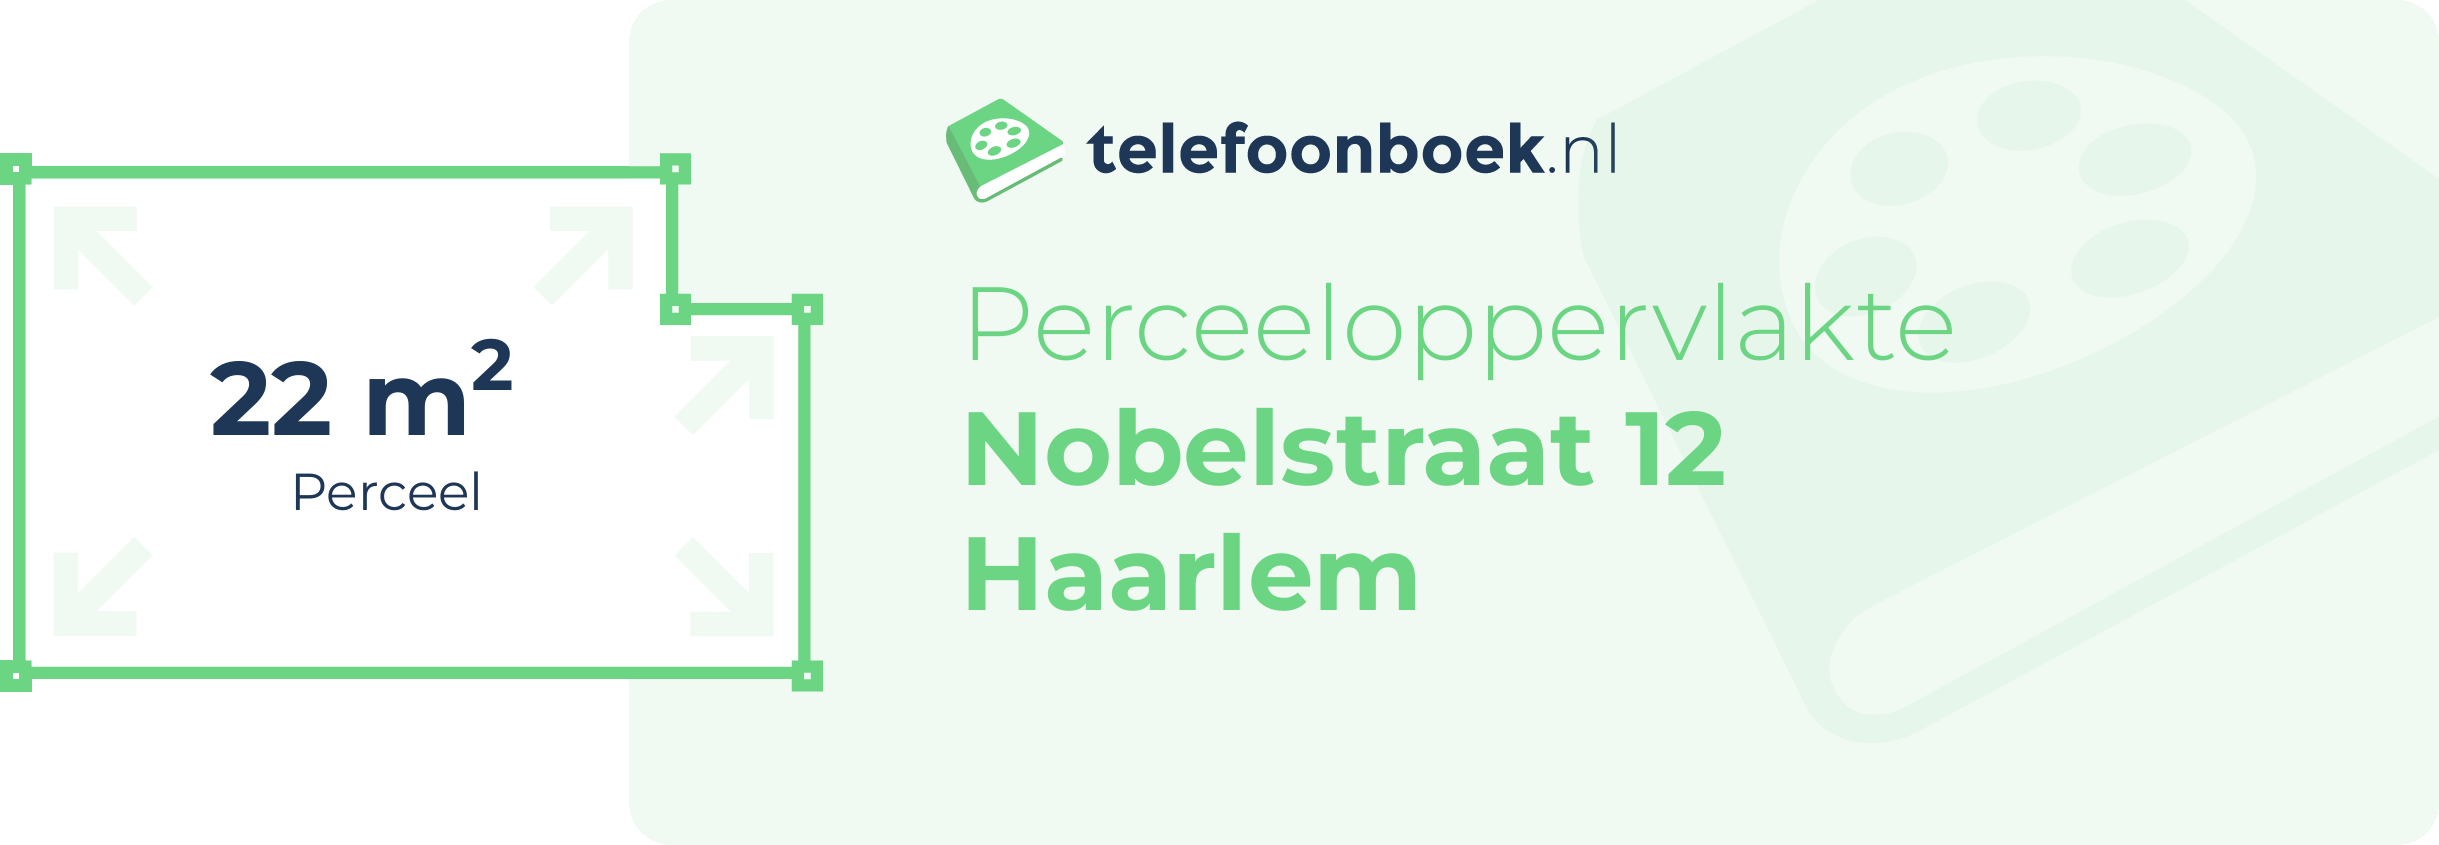 Perceeloppervlakte Nobelstraat 12 Haarlem